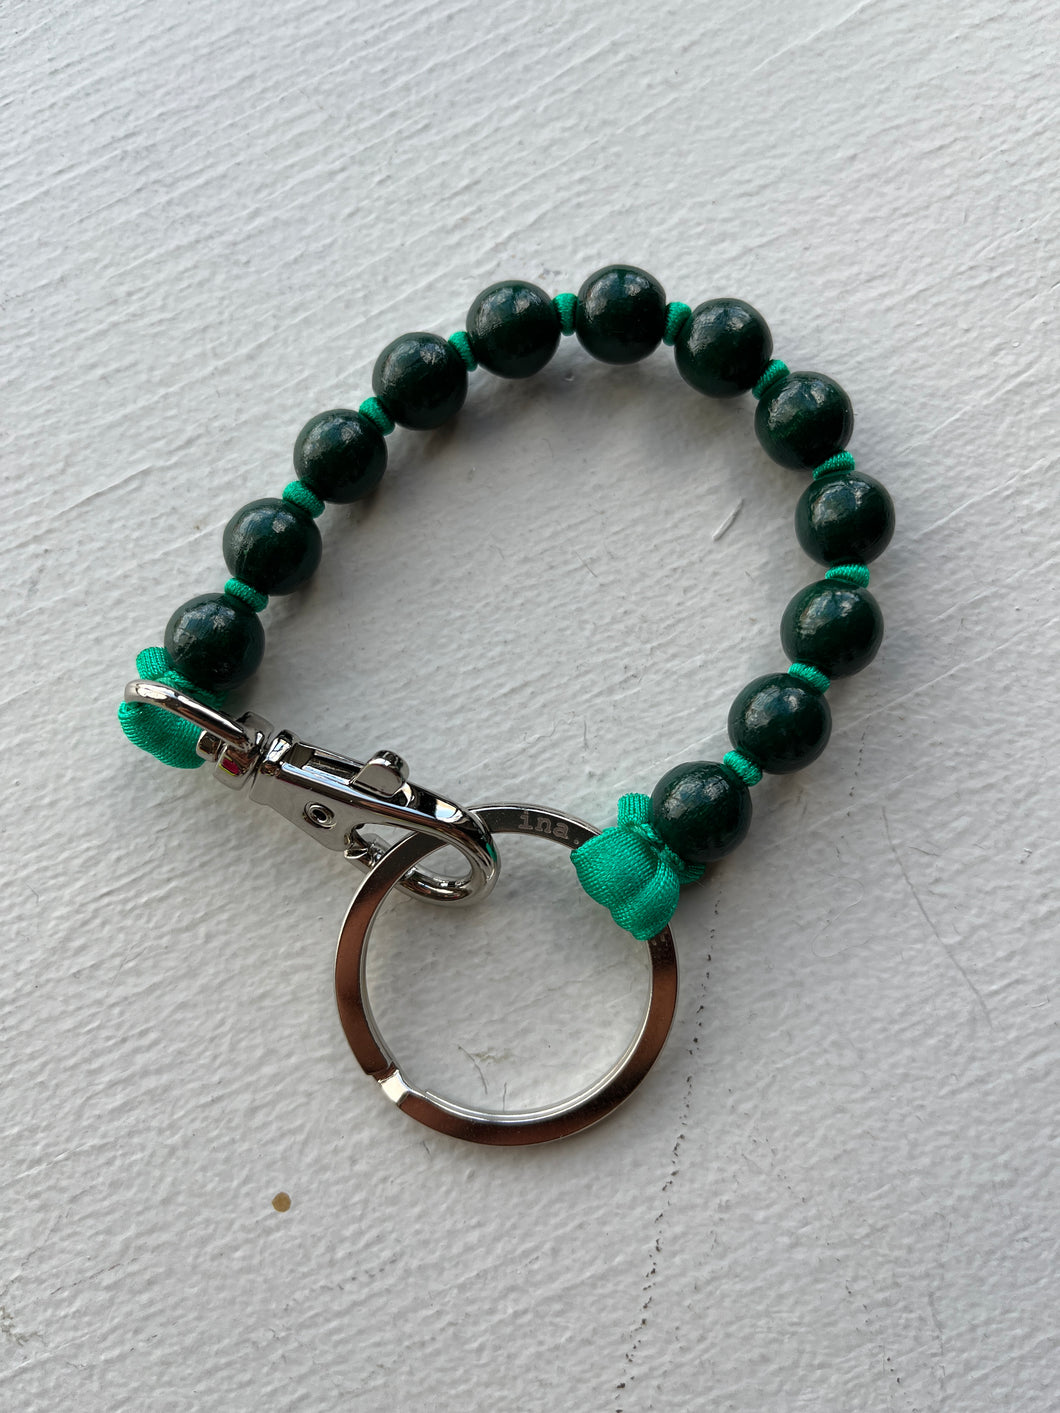 ina seifart - Perlen Short Keychain - viridian green, teal ribbon